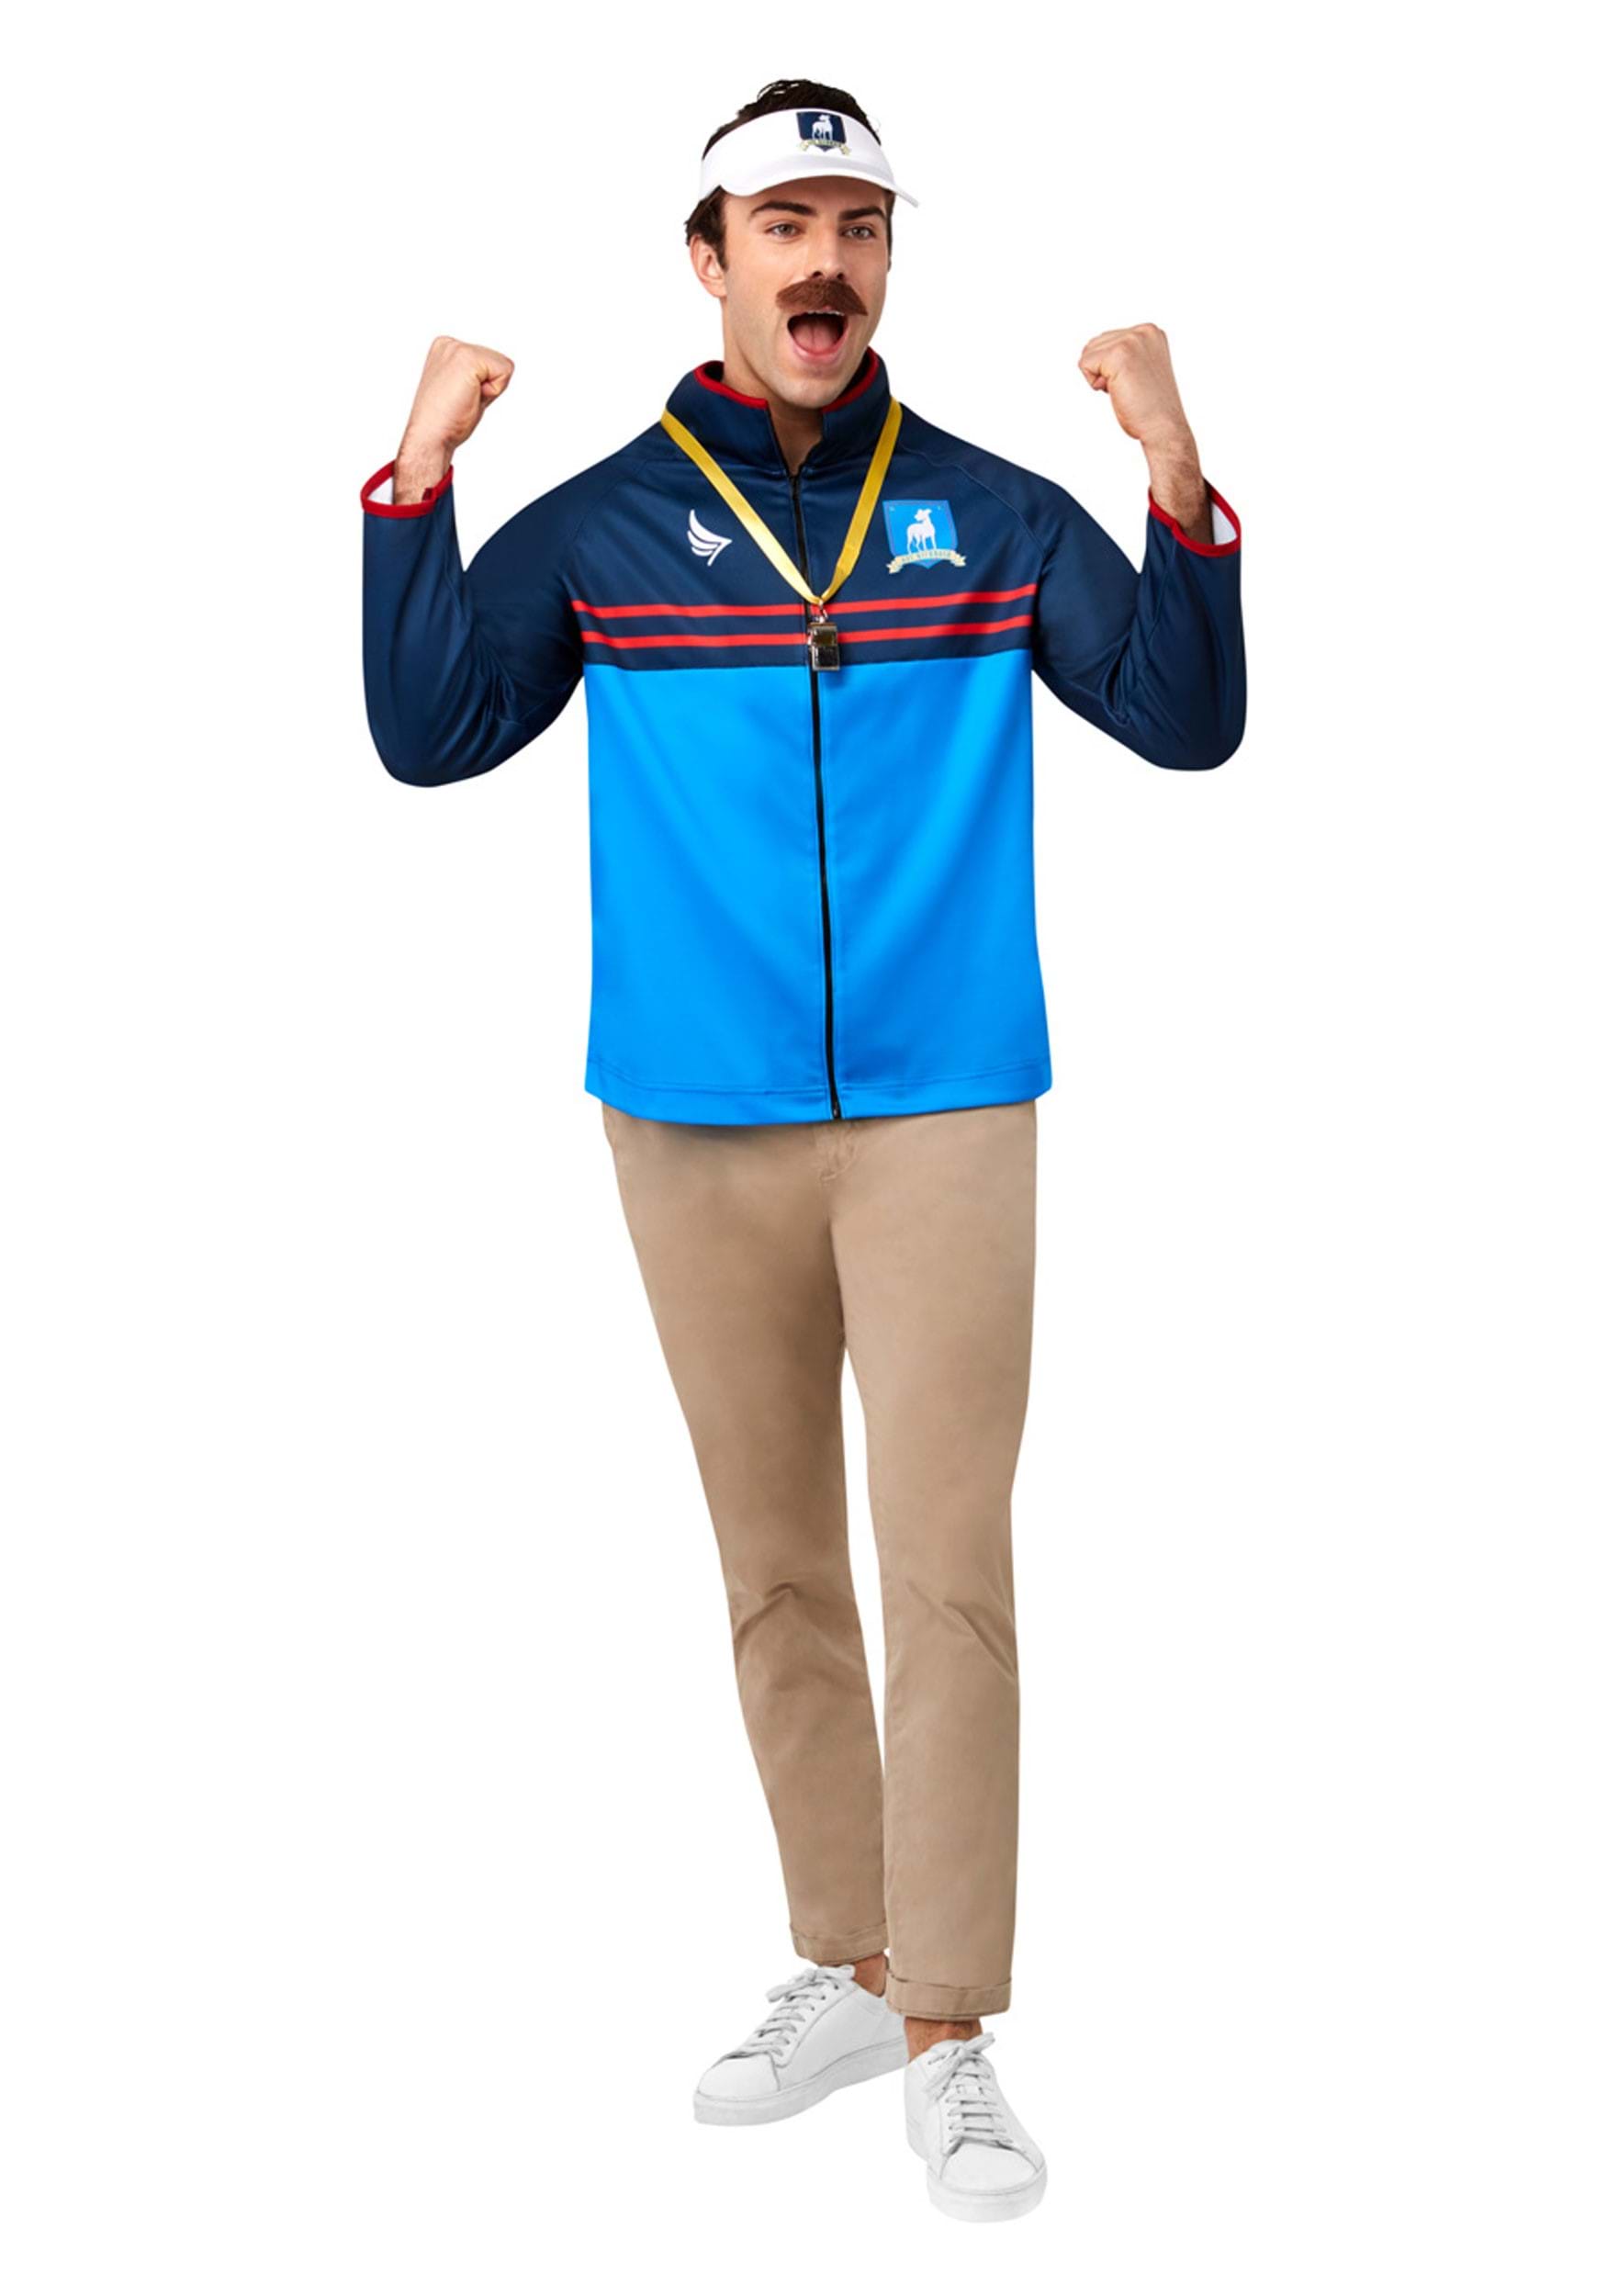 Image of Ted Lasso Adult Costume Kit ID RU1000035-XL